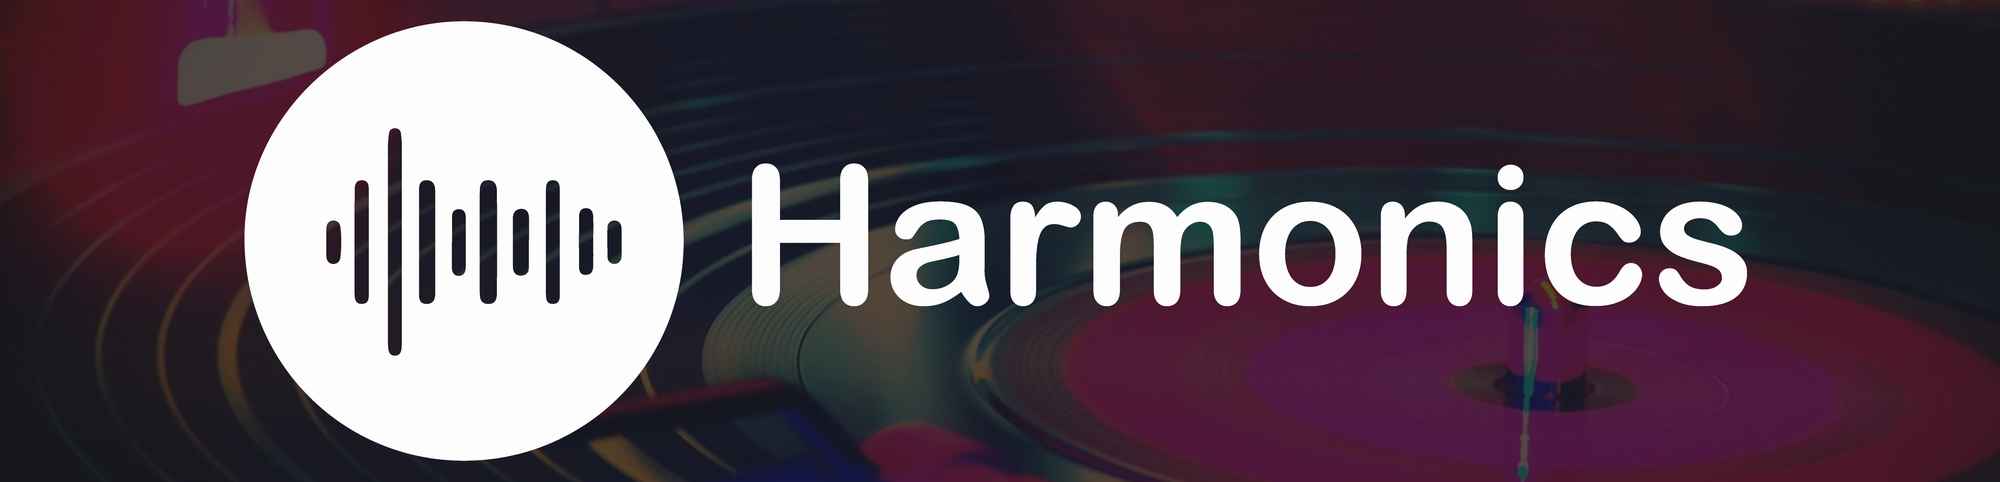 SYNCS Hackathon 2020 - Harmonics